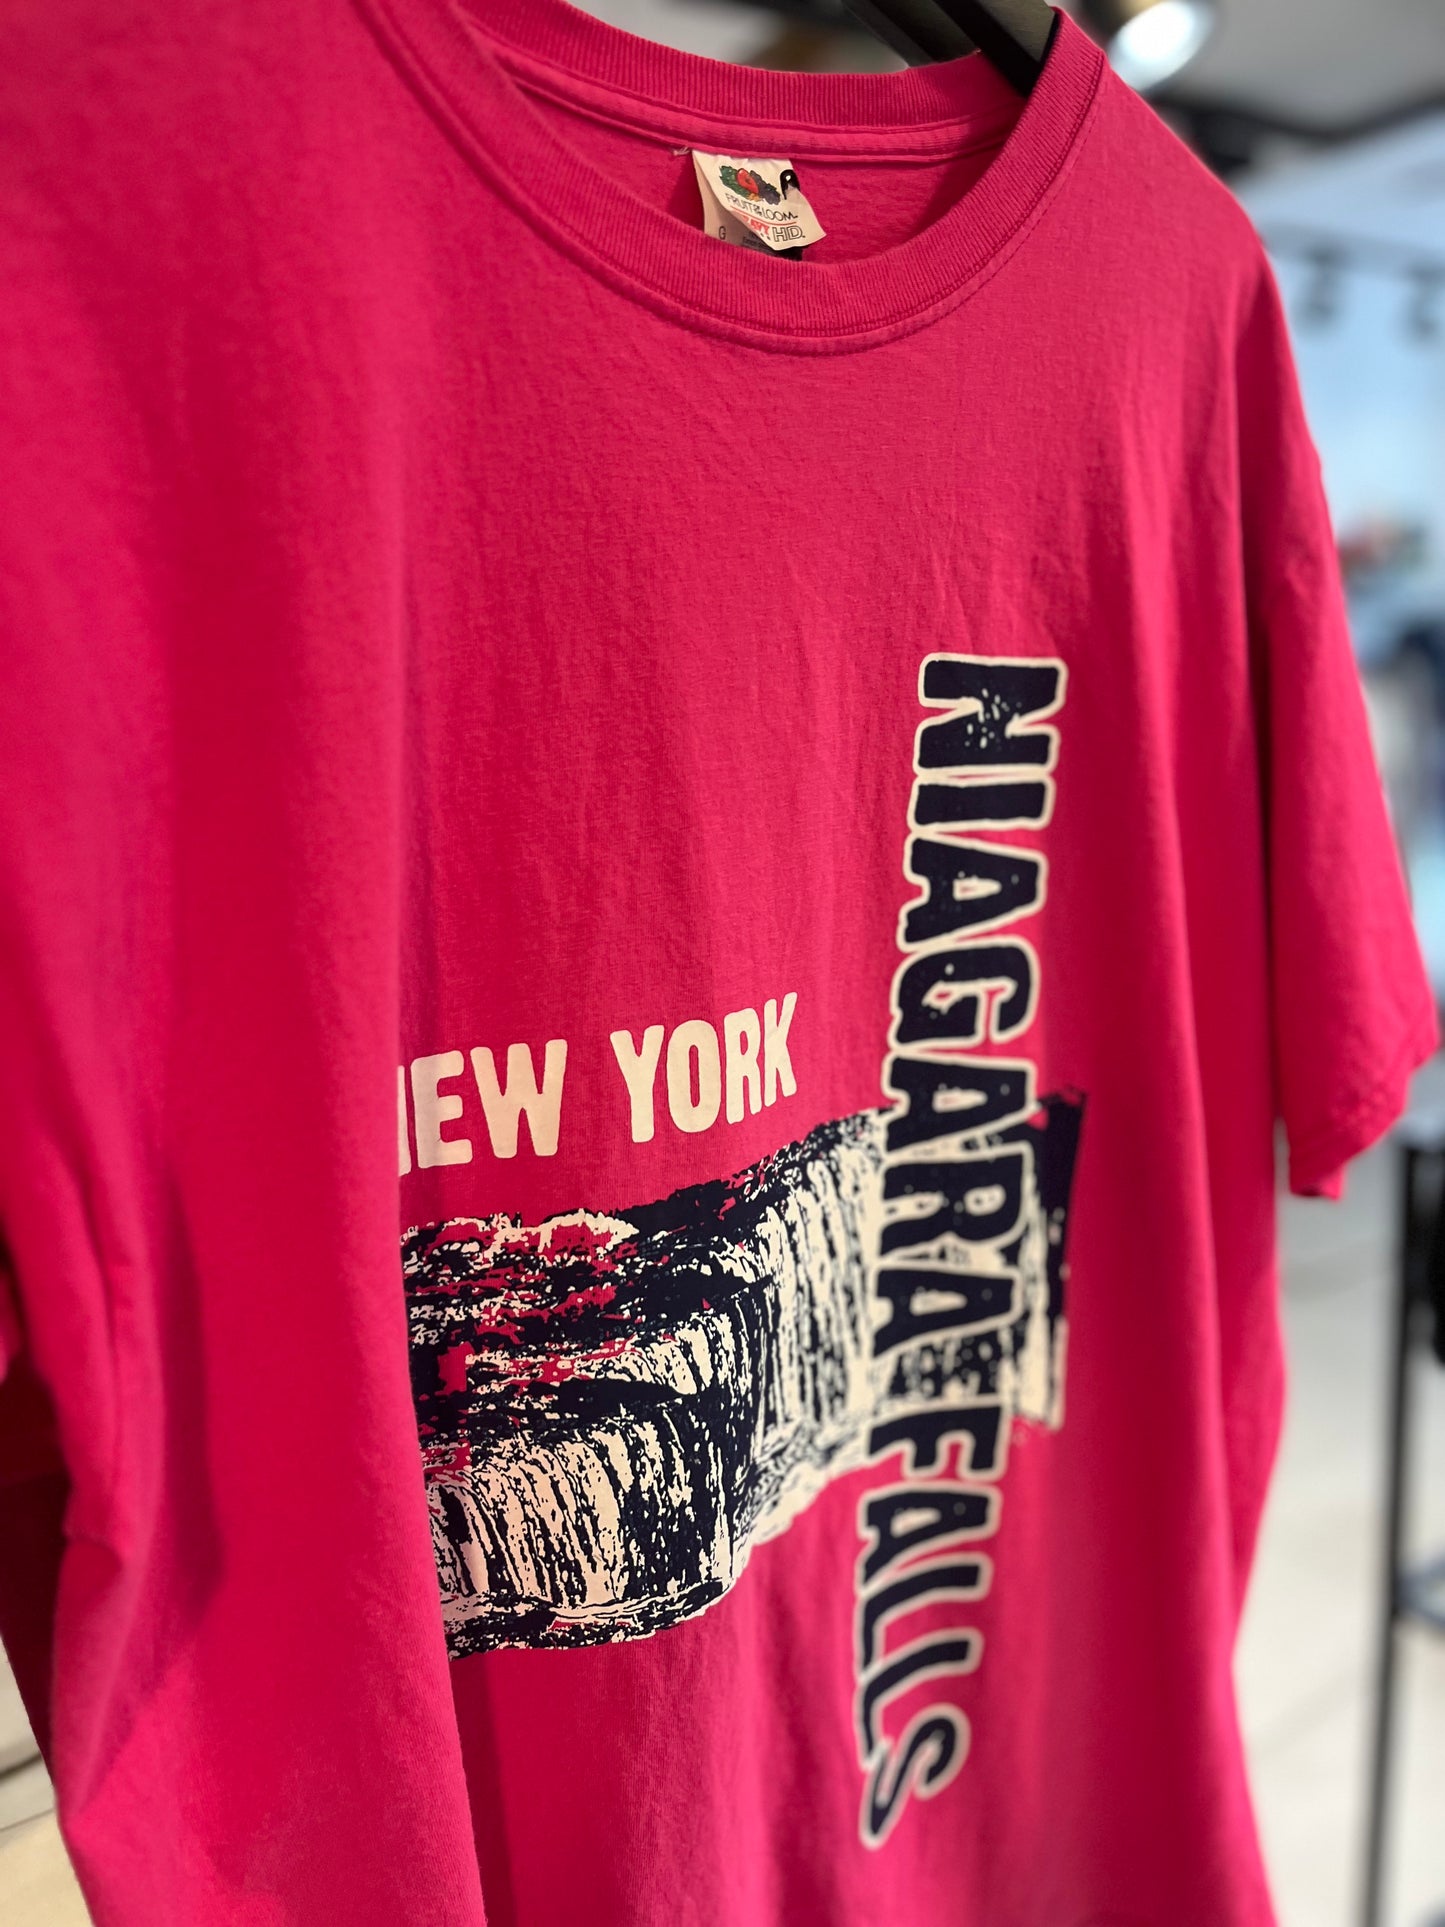 Tee-shirt rose US NiagaraFalls L